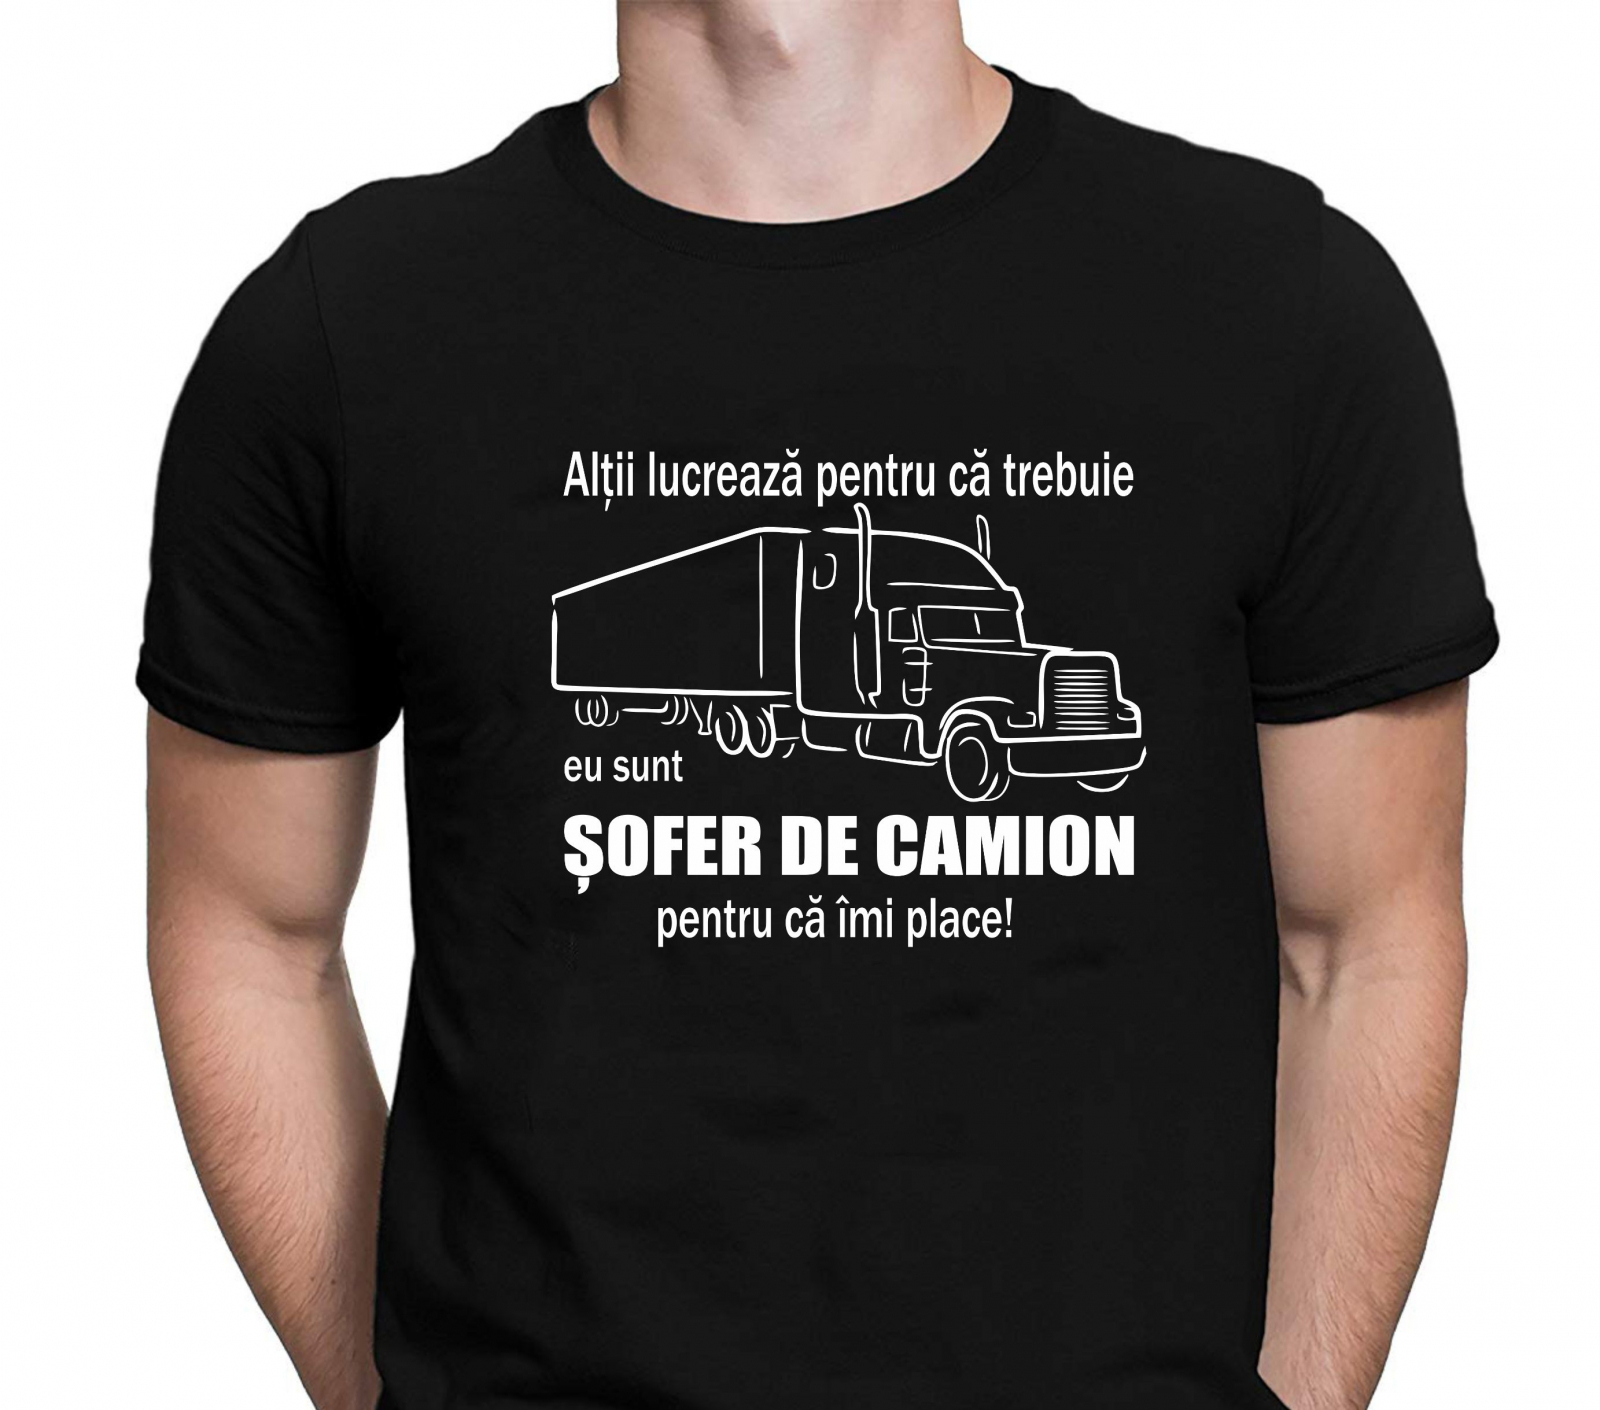 Boil Greet barrier Tricou Personalizat - Sunt Sofer De Camion Pentru Ca Imi Place